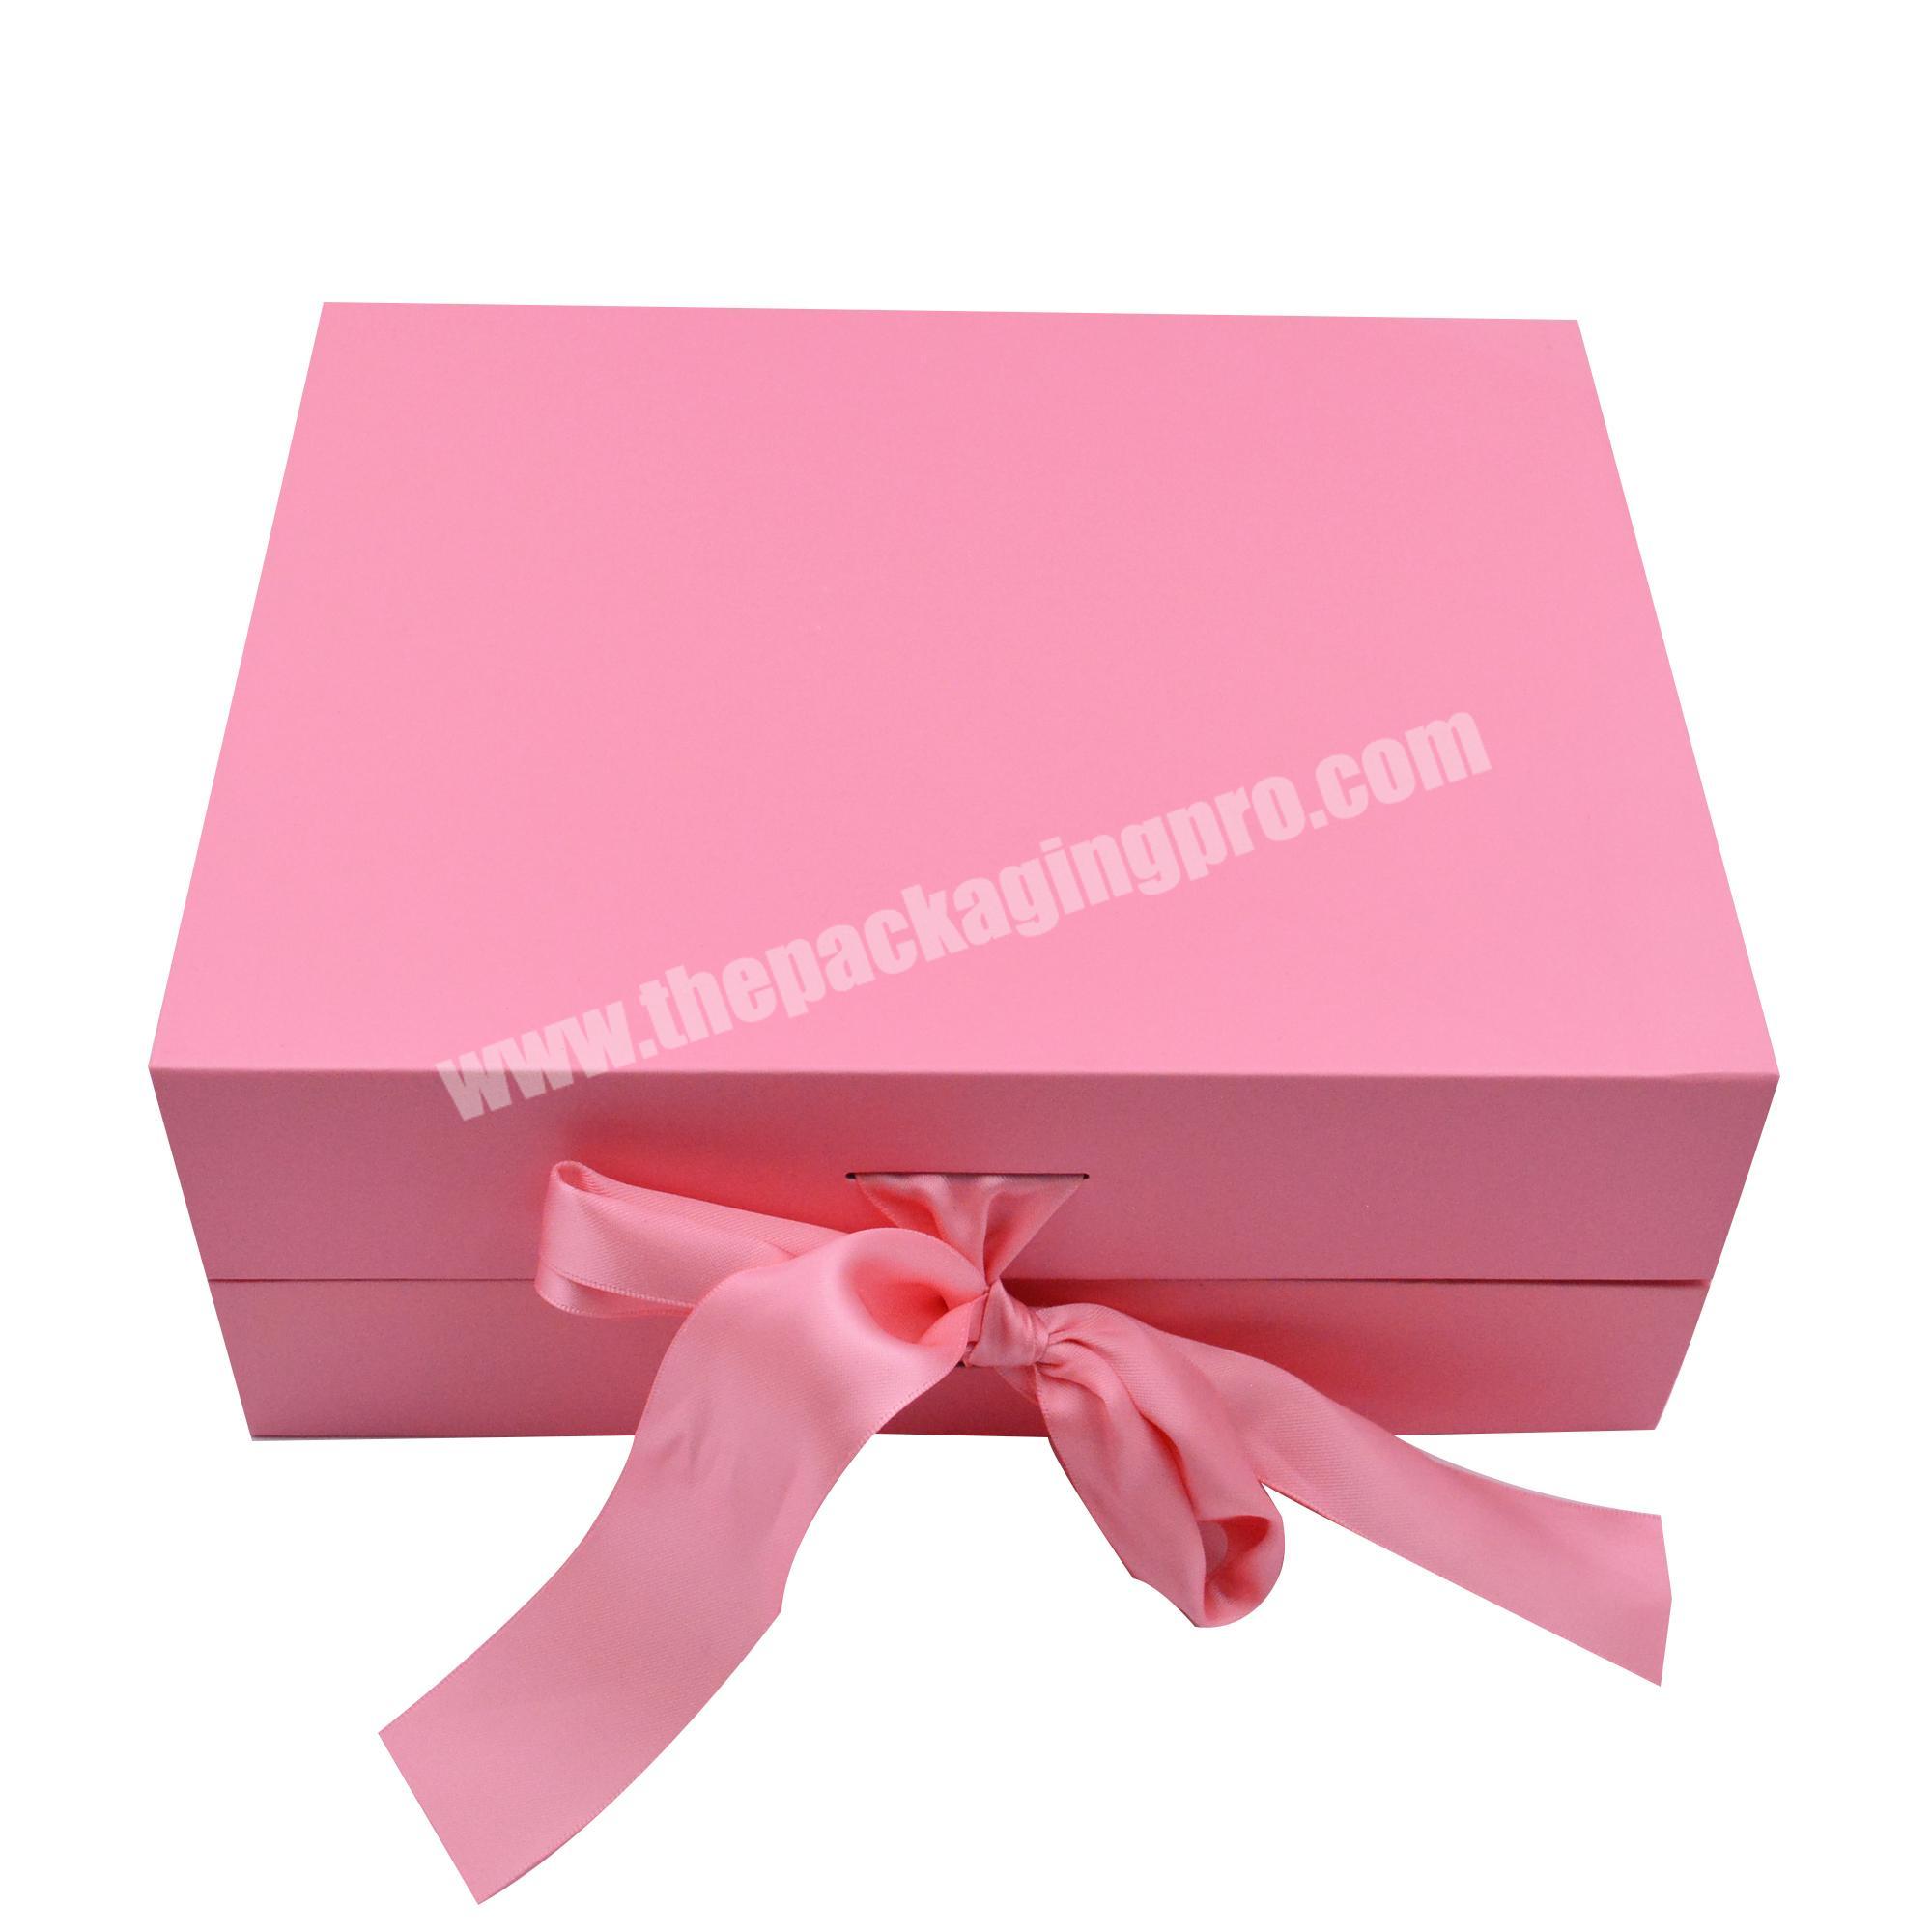 Wholesales Custom High Quality Rigid Foldable Cardboard Gift Box with Lid Cosmetics Luxury wedding dress Gift Box Packaging